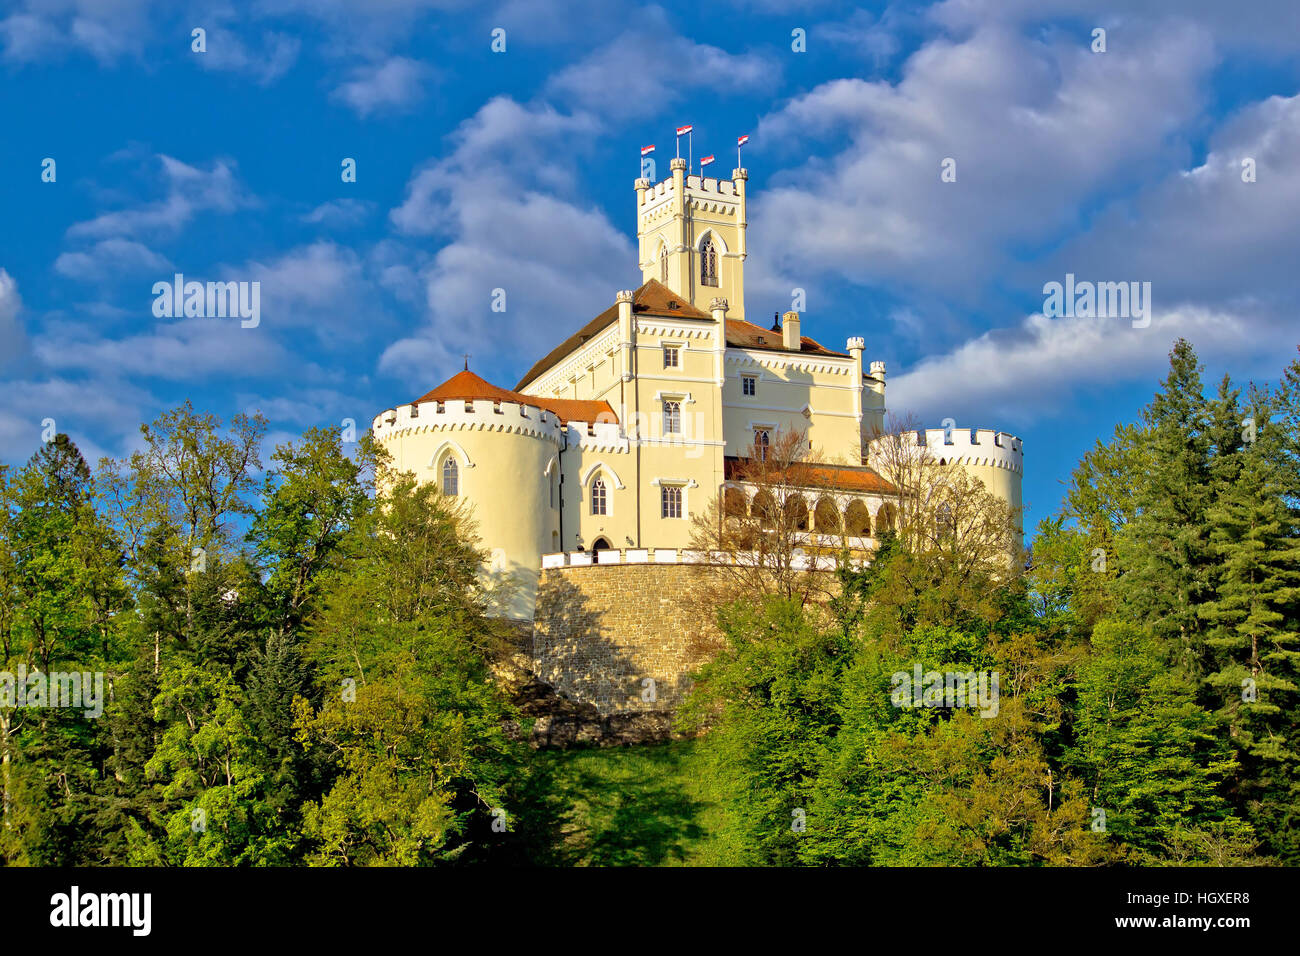 Colorful castle on green hill, Trakoscan, Croatia Stock Photo